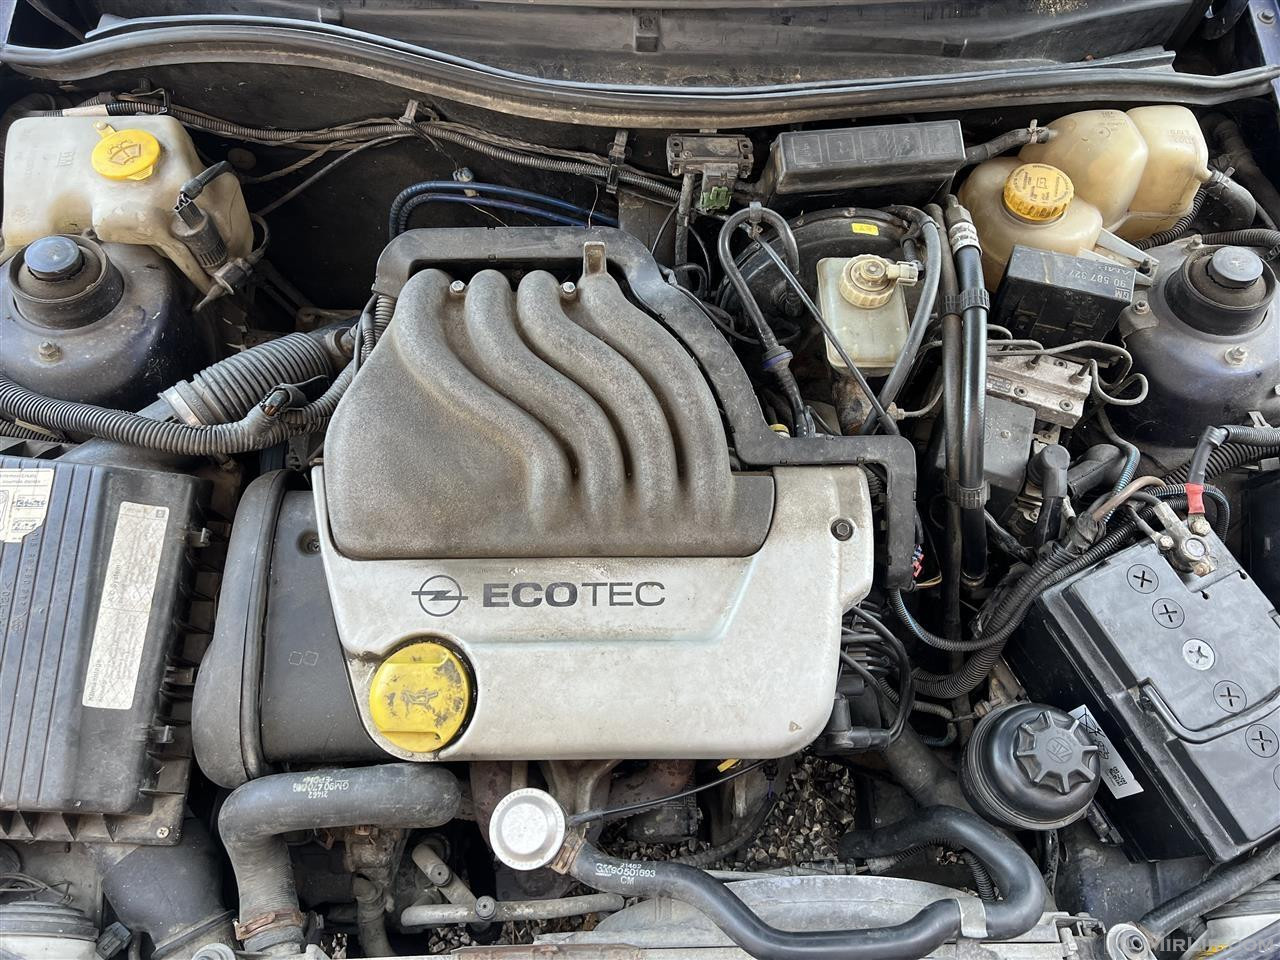 Motorr ECO TEC 1.6b Opel 049/834/680 